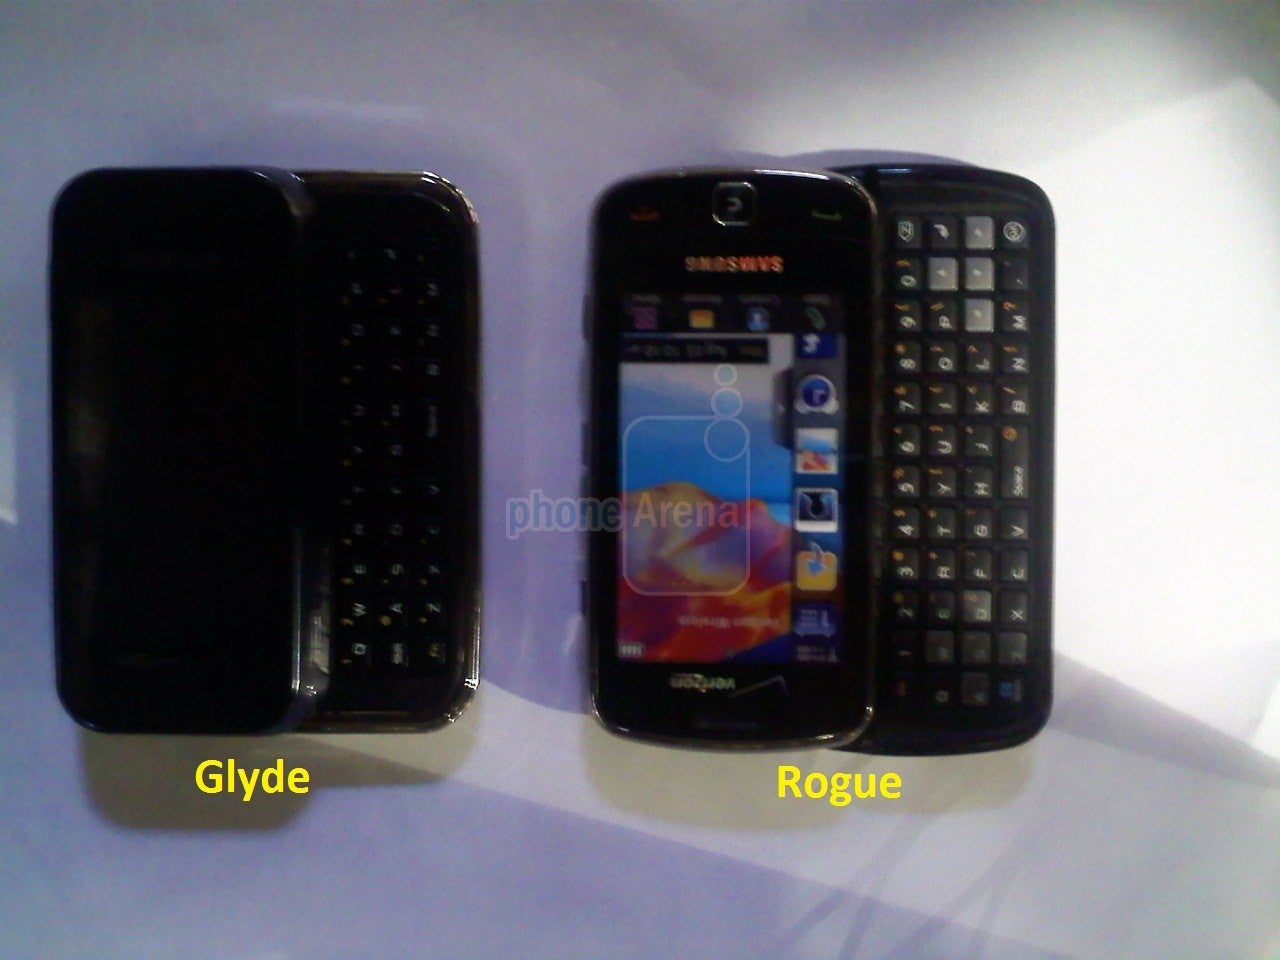 Spy pics of the new Samsung Rogue U960 for Verizon